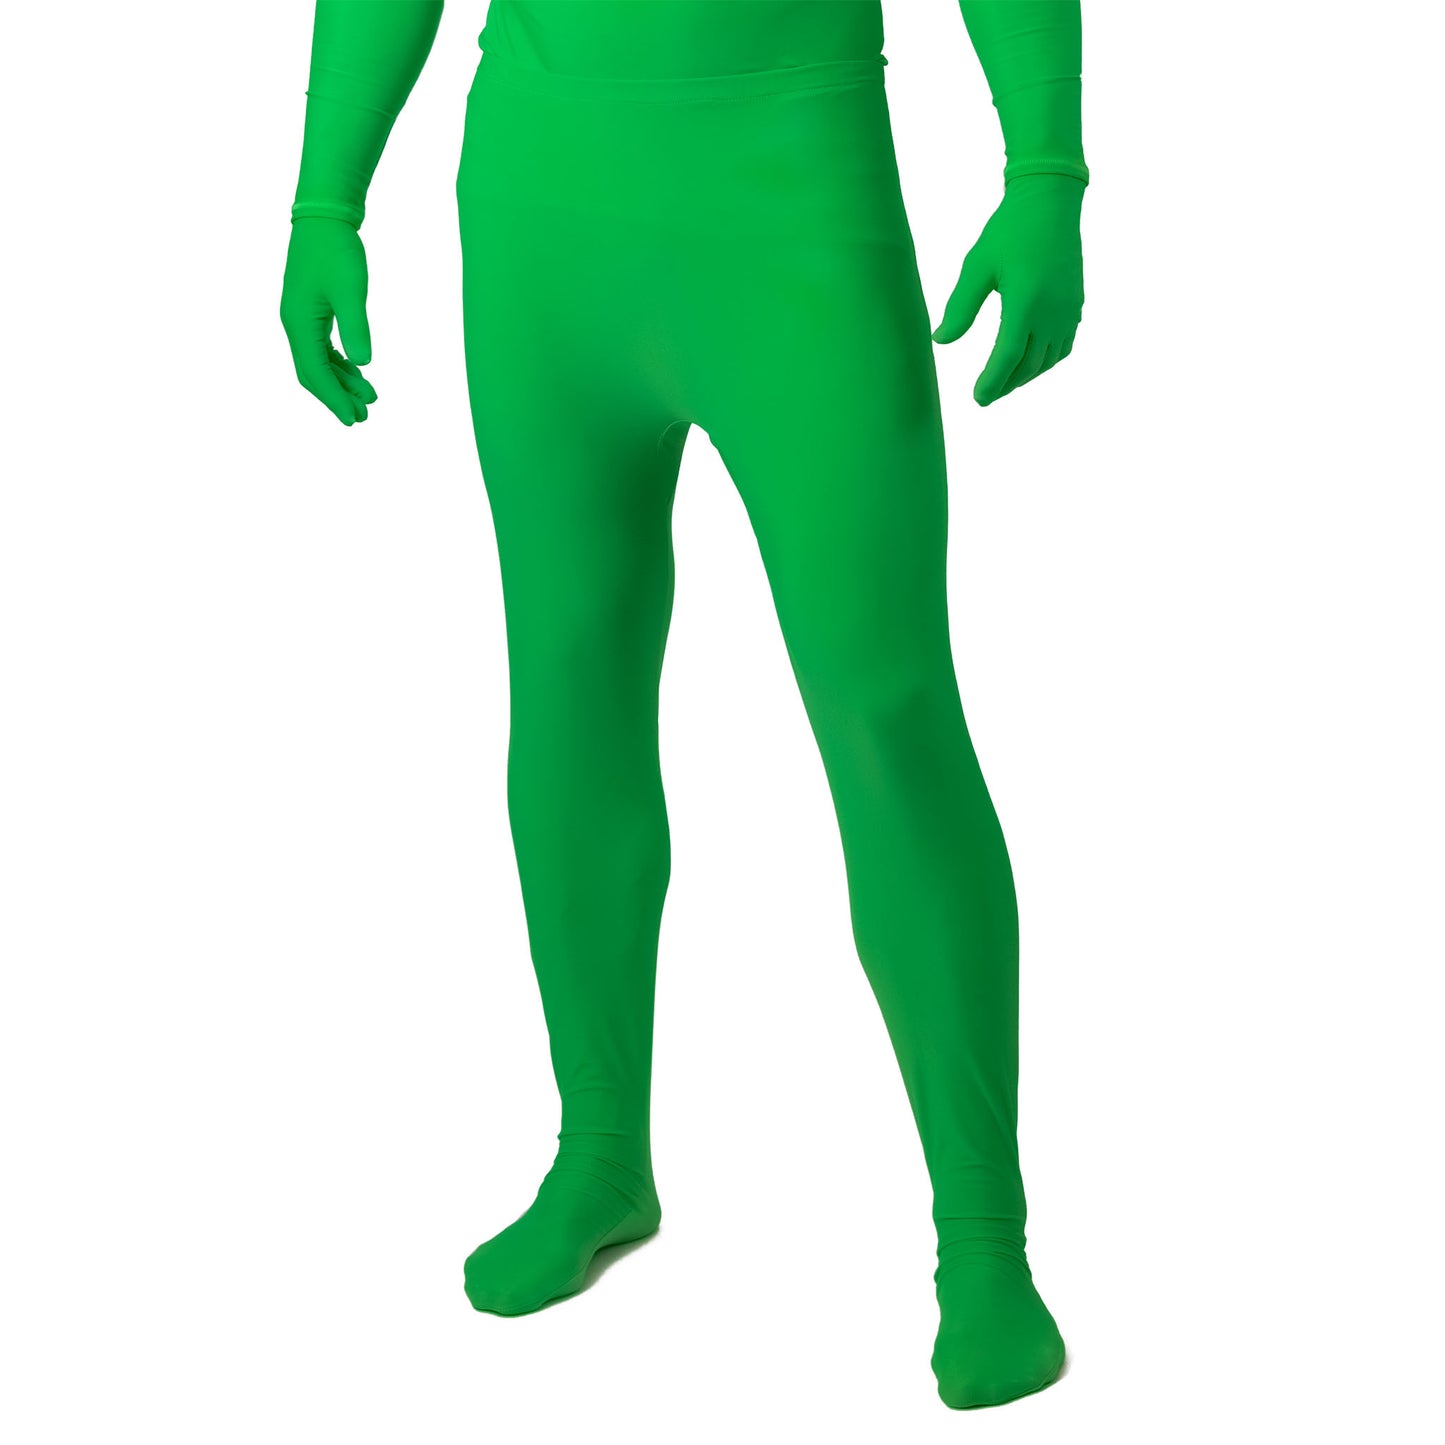 chroma key green screen pant pose